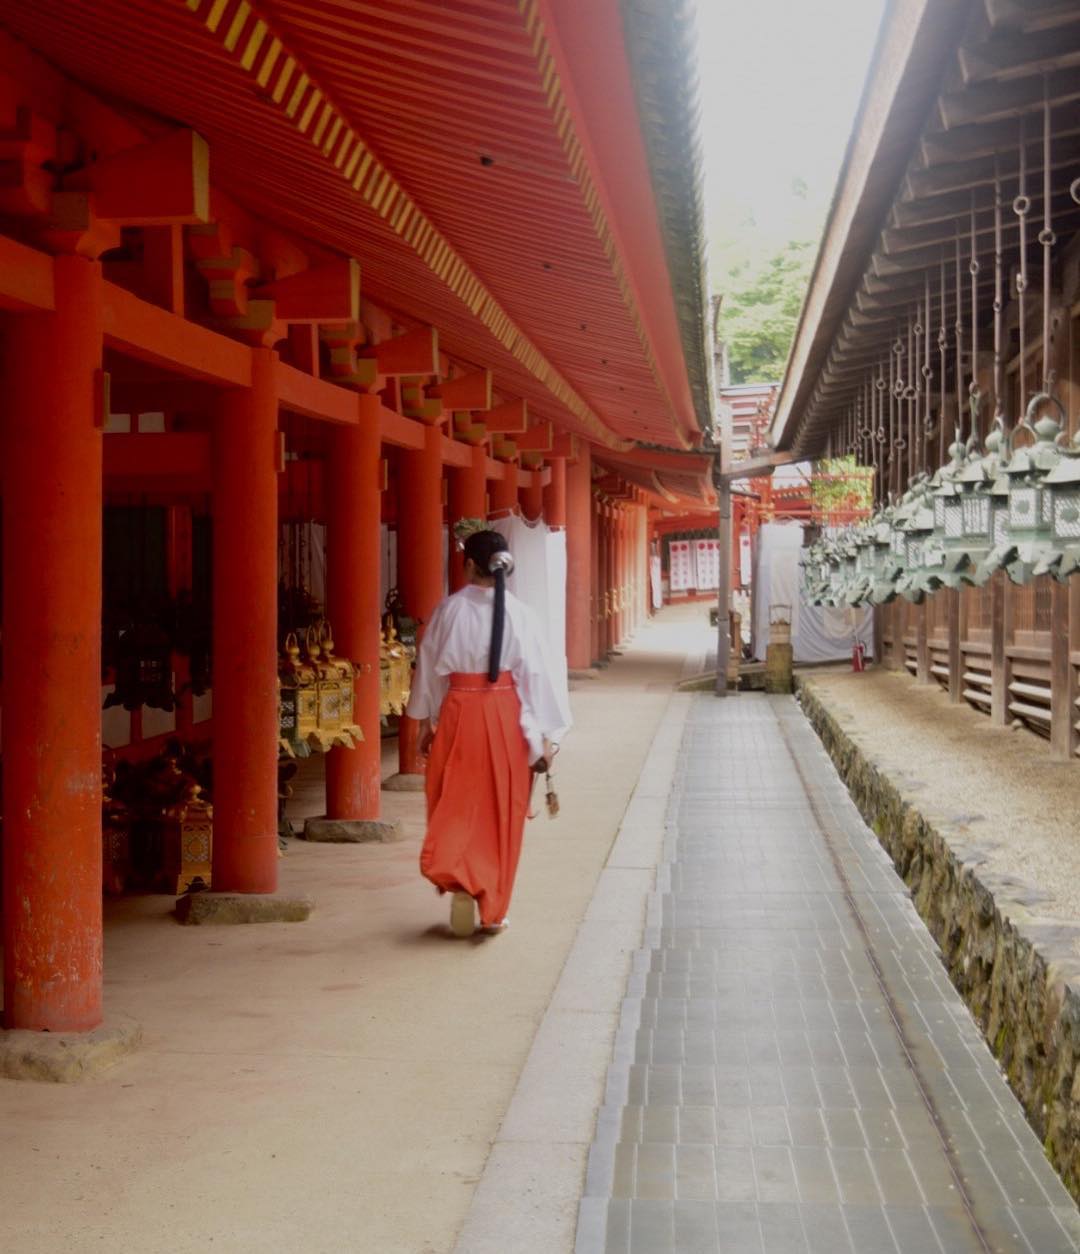 Assistente xintoísta checando as lanternas do santuário.